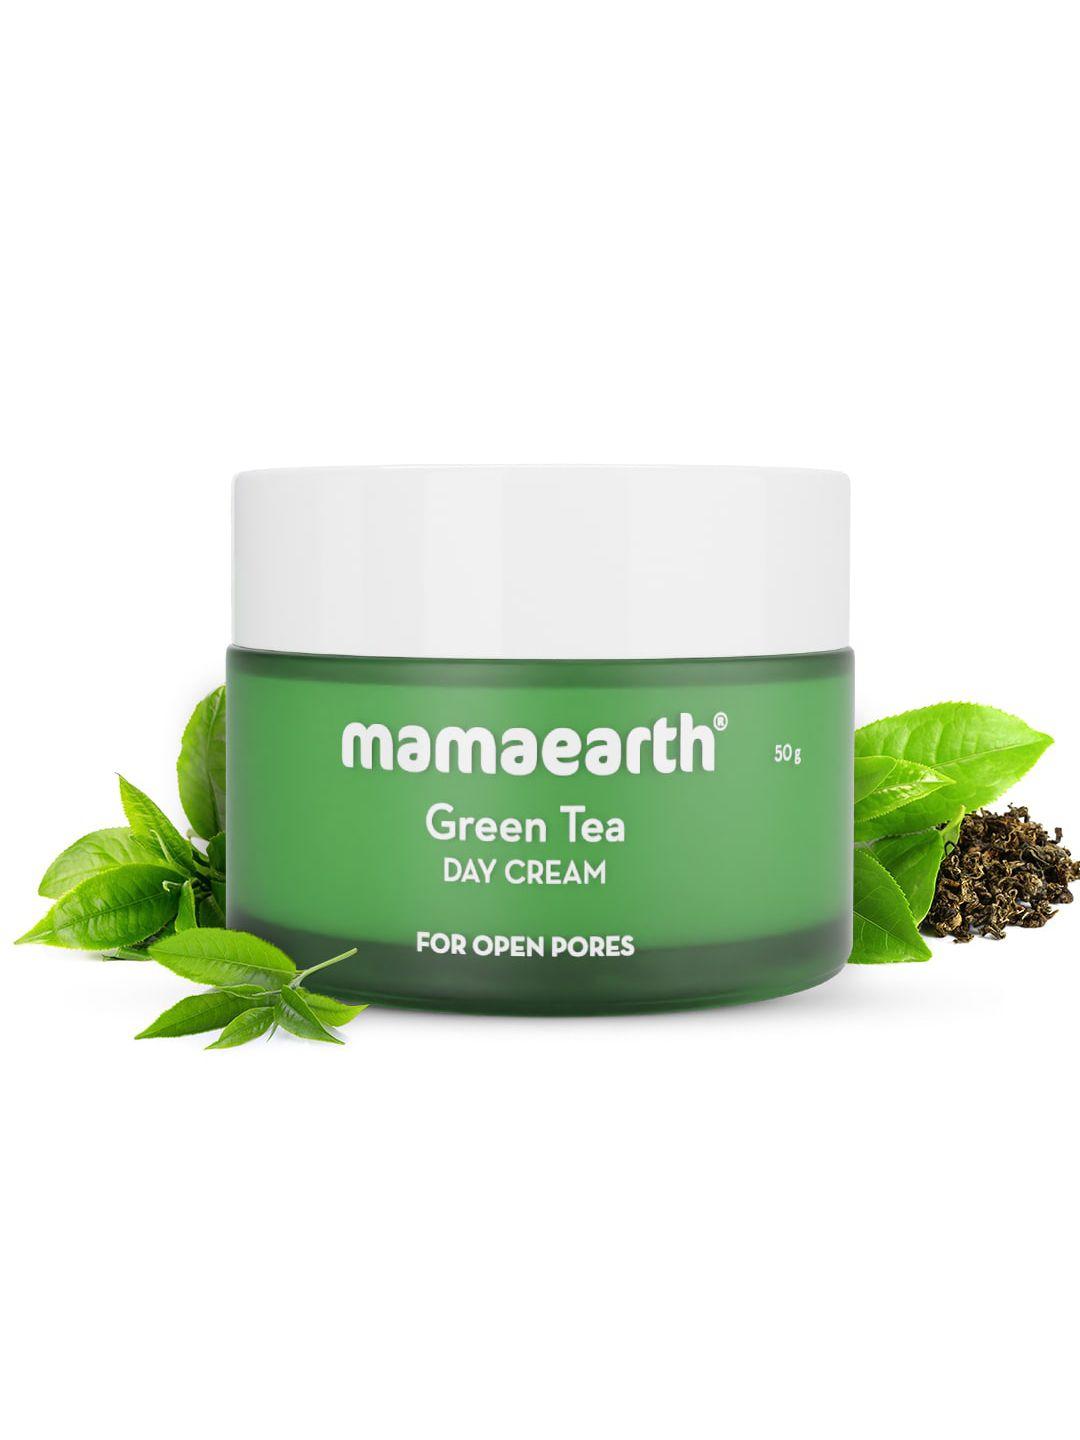 mamaearth green tea day cream 50g